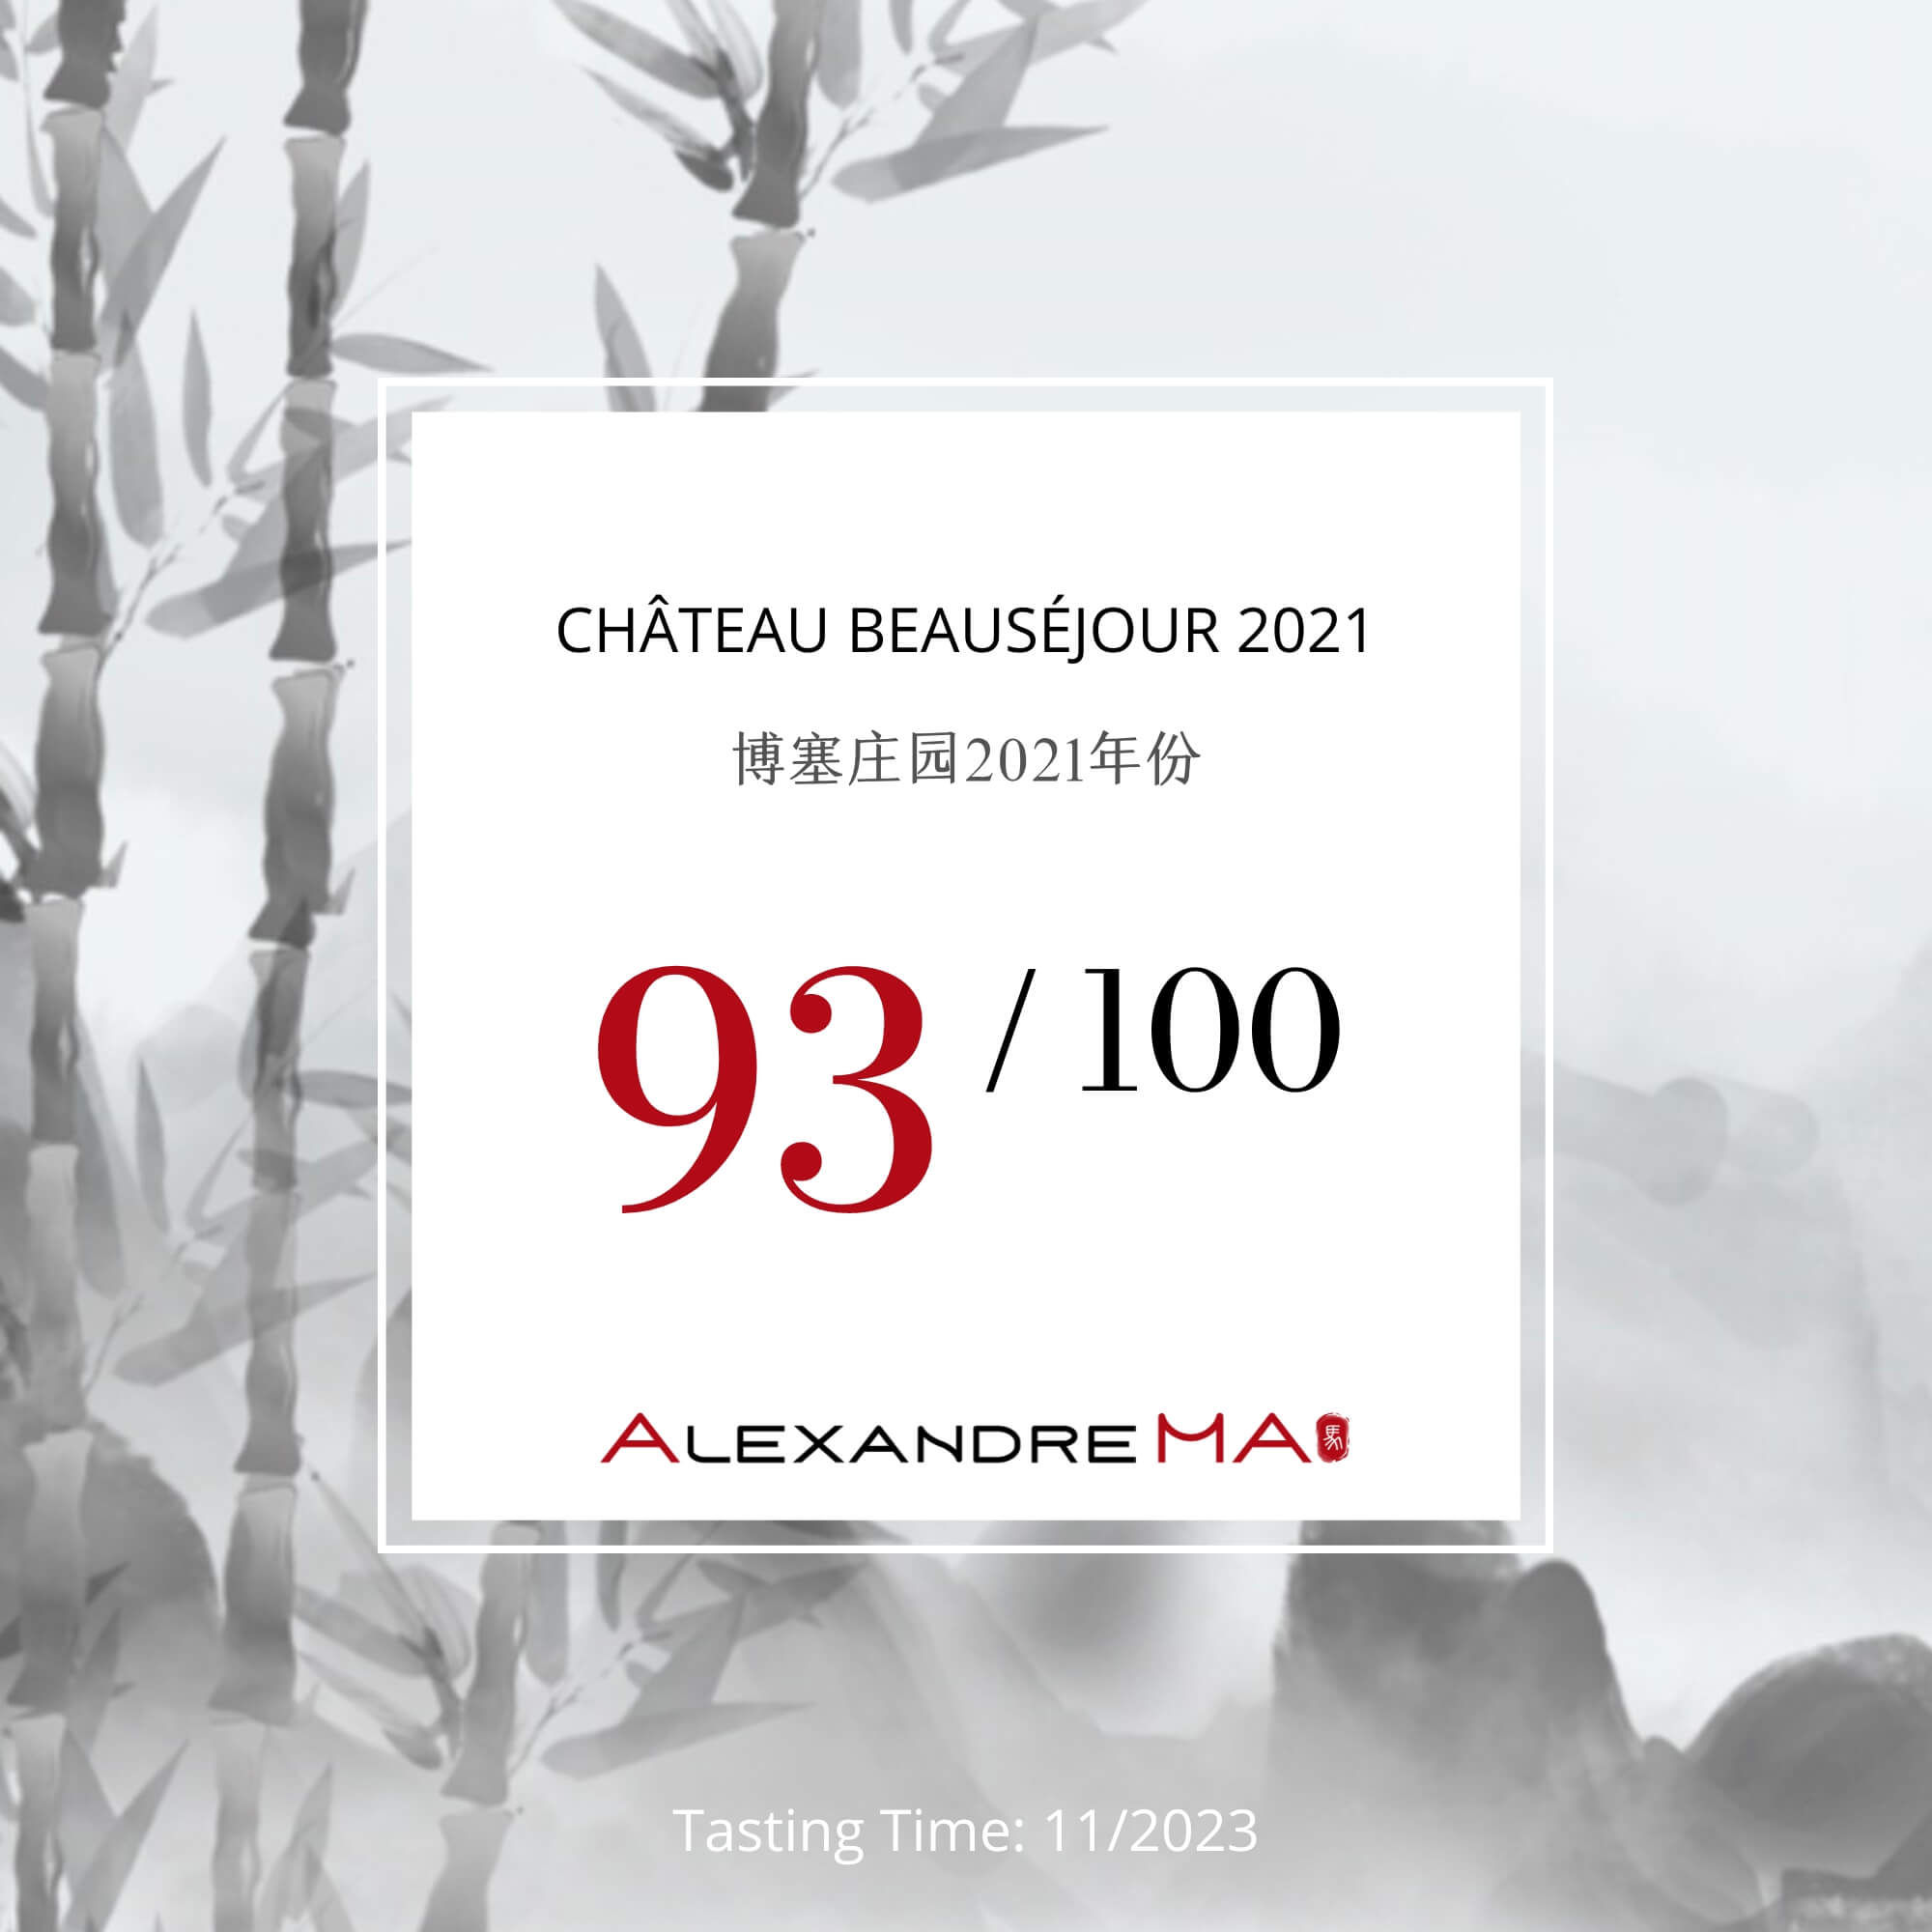 Château Beauséjour 2021 - Alexandre MA